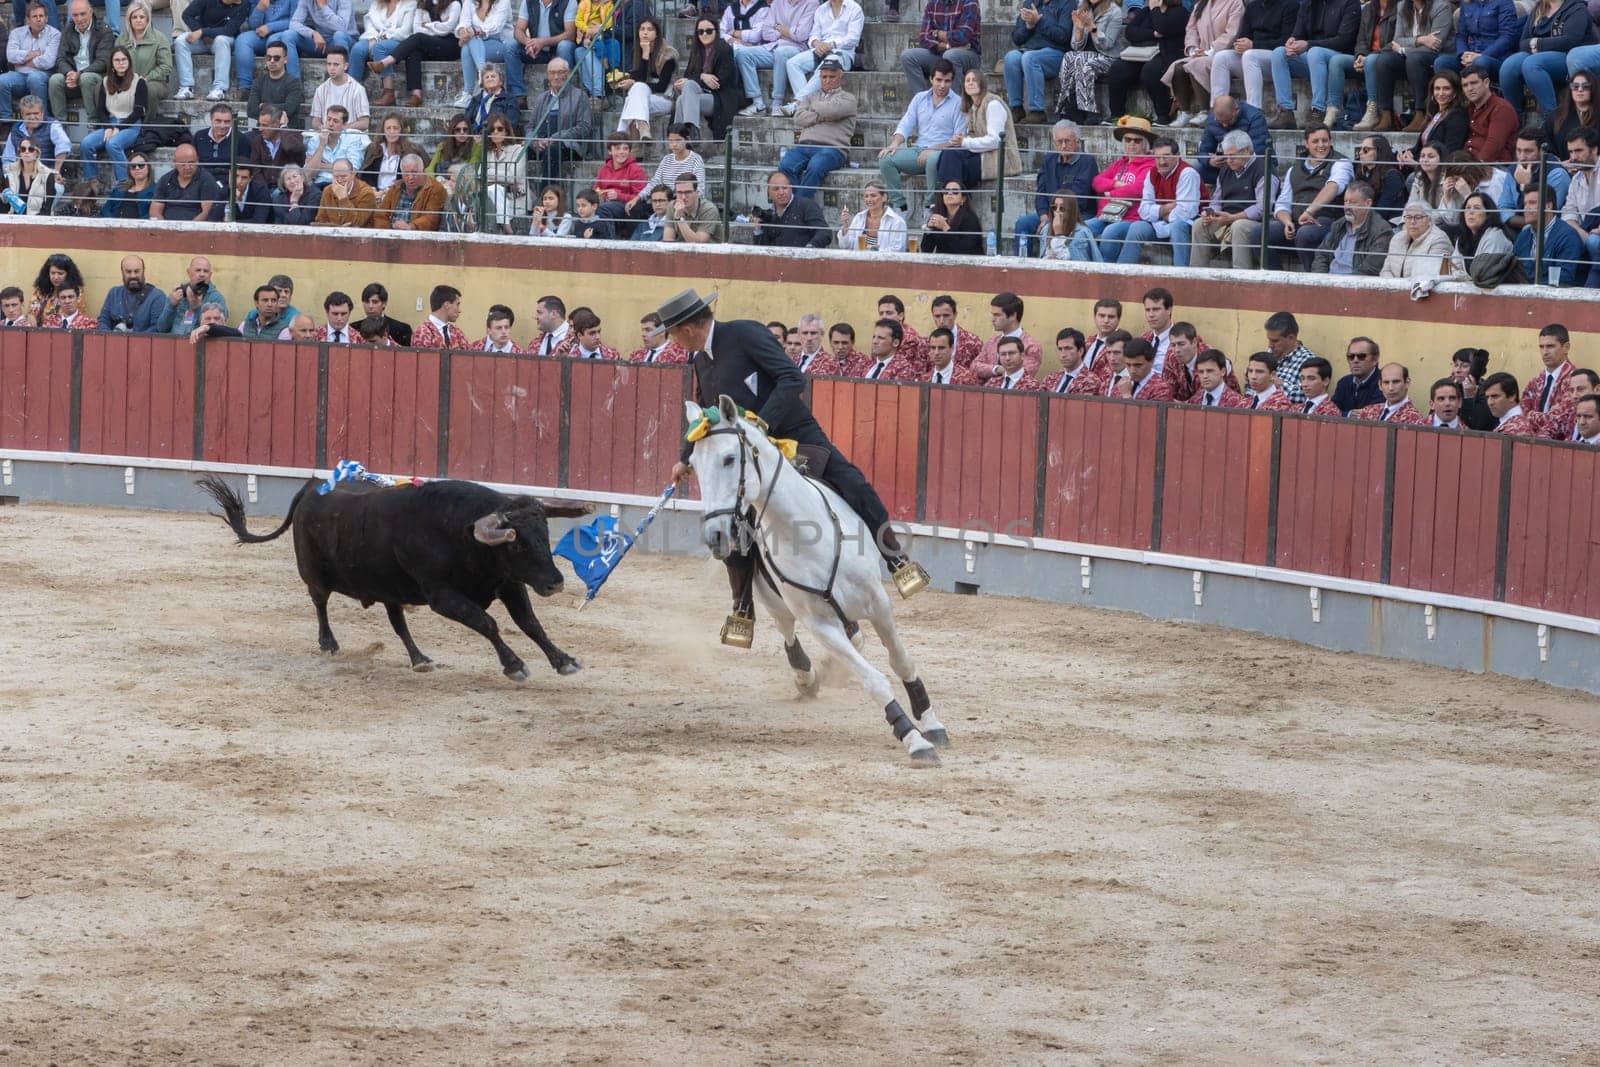 March 26, 2023 Lisbon, Portugal: Tourada - cavaleiro on horseback provokes the bull on arena. Mid shot